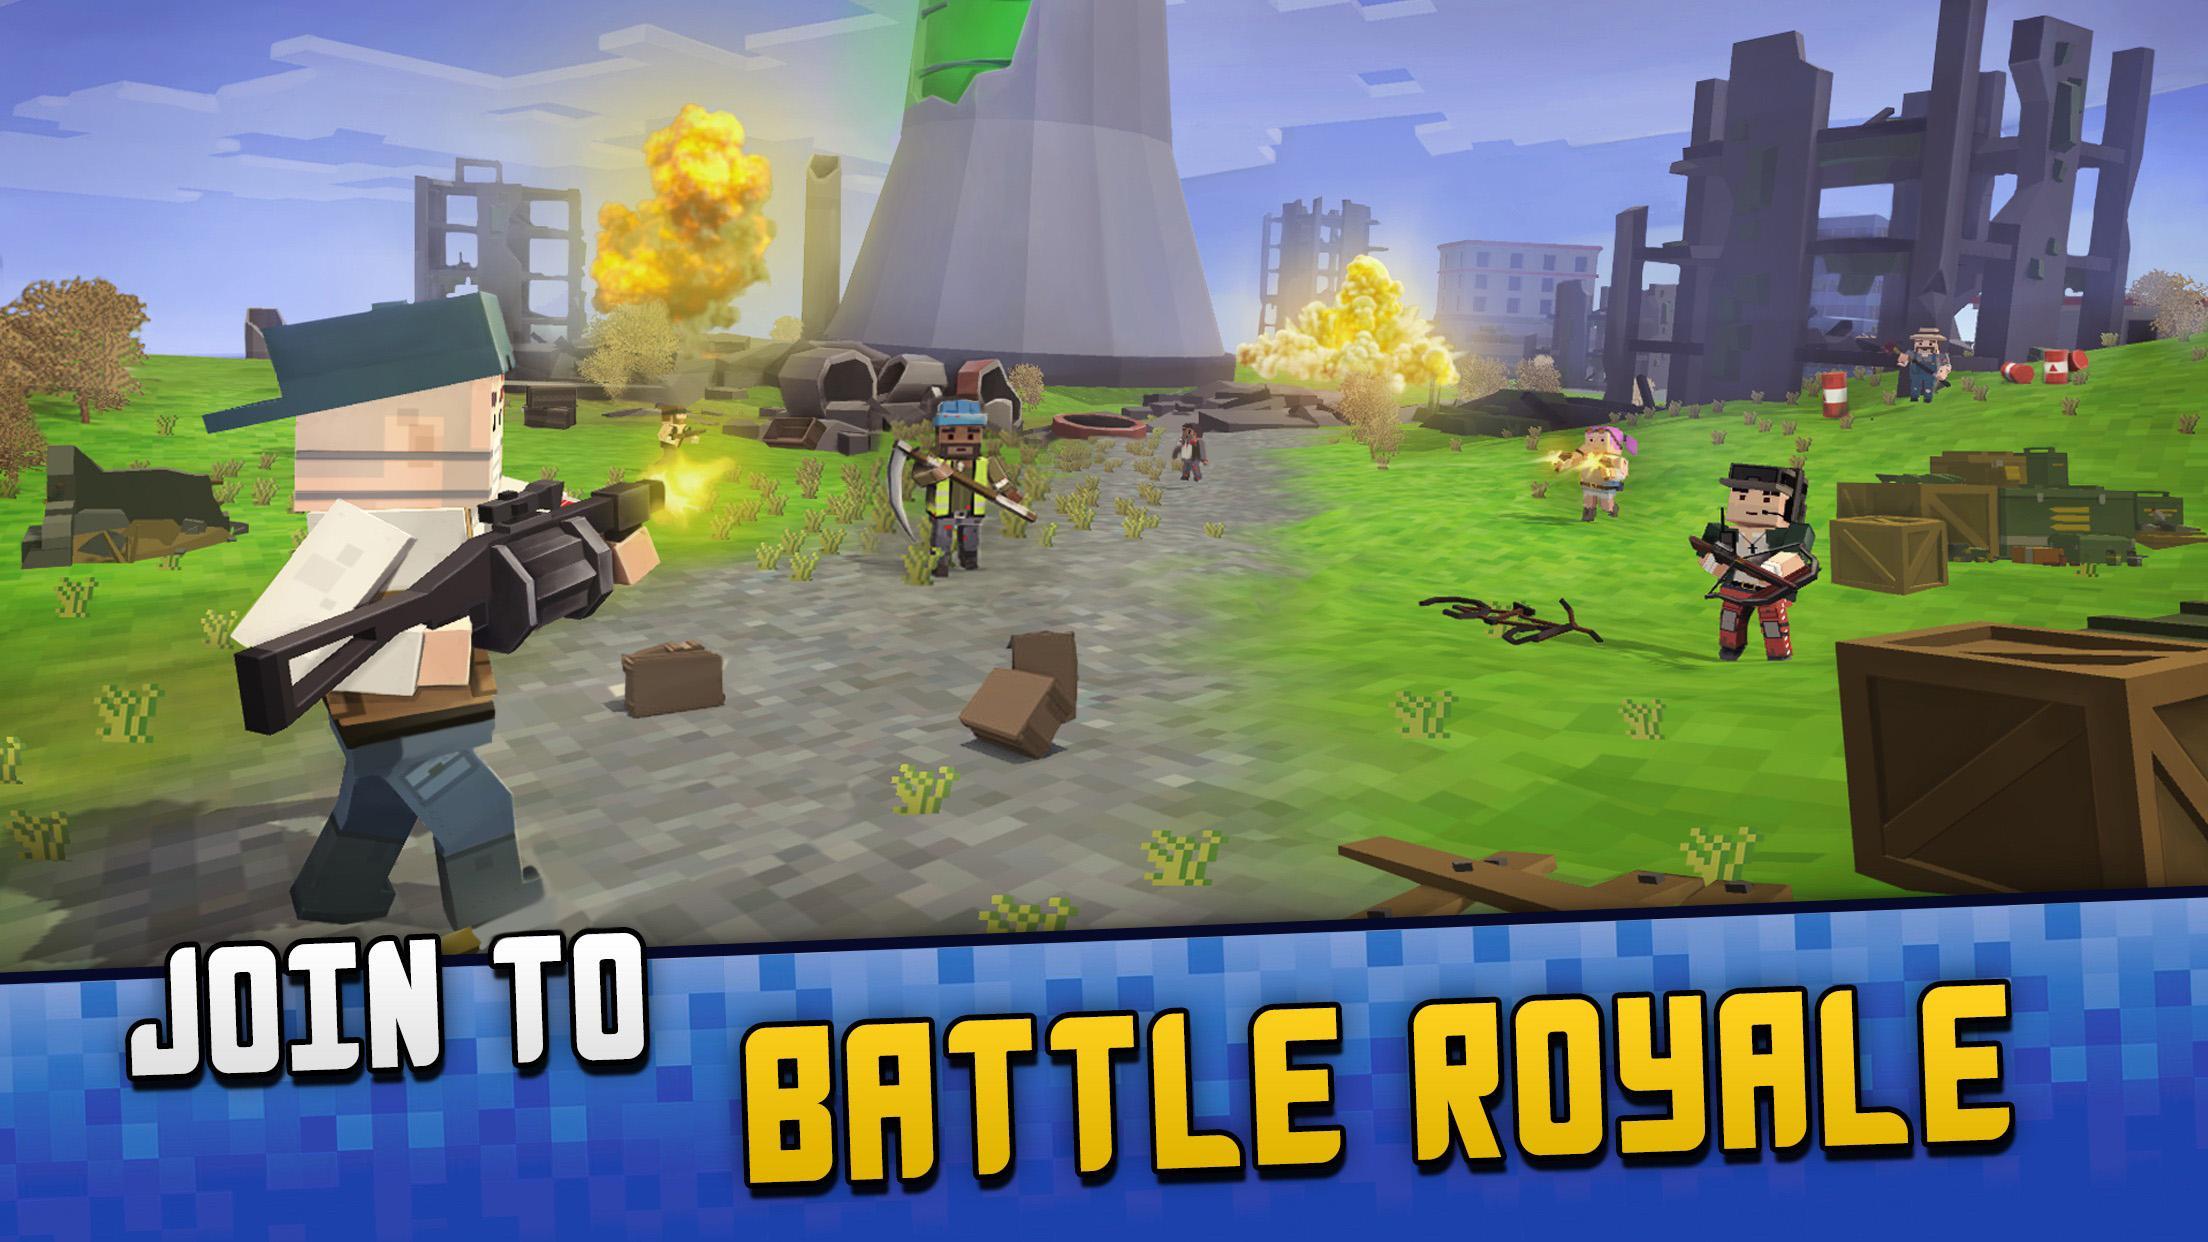 Pixel Gun Mobile Shooter Battle Royale Simulator For Android Apk Download - battle royale simulator huge update roblox